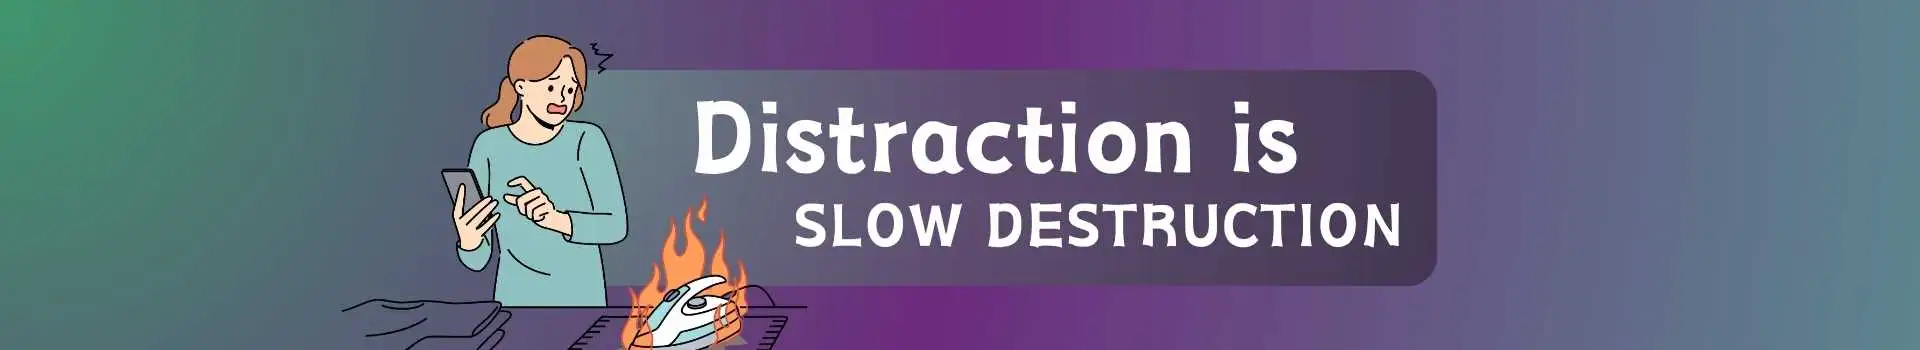 Distraction is slow destruction ytthumbnail